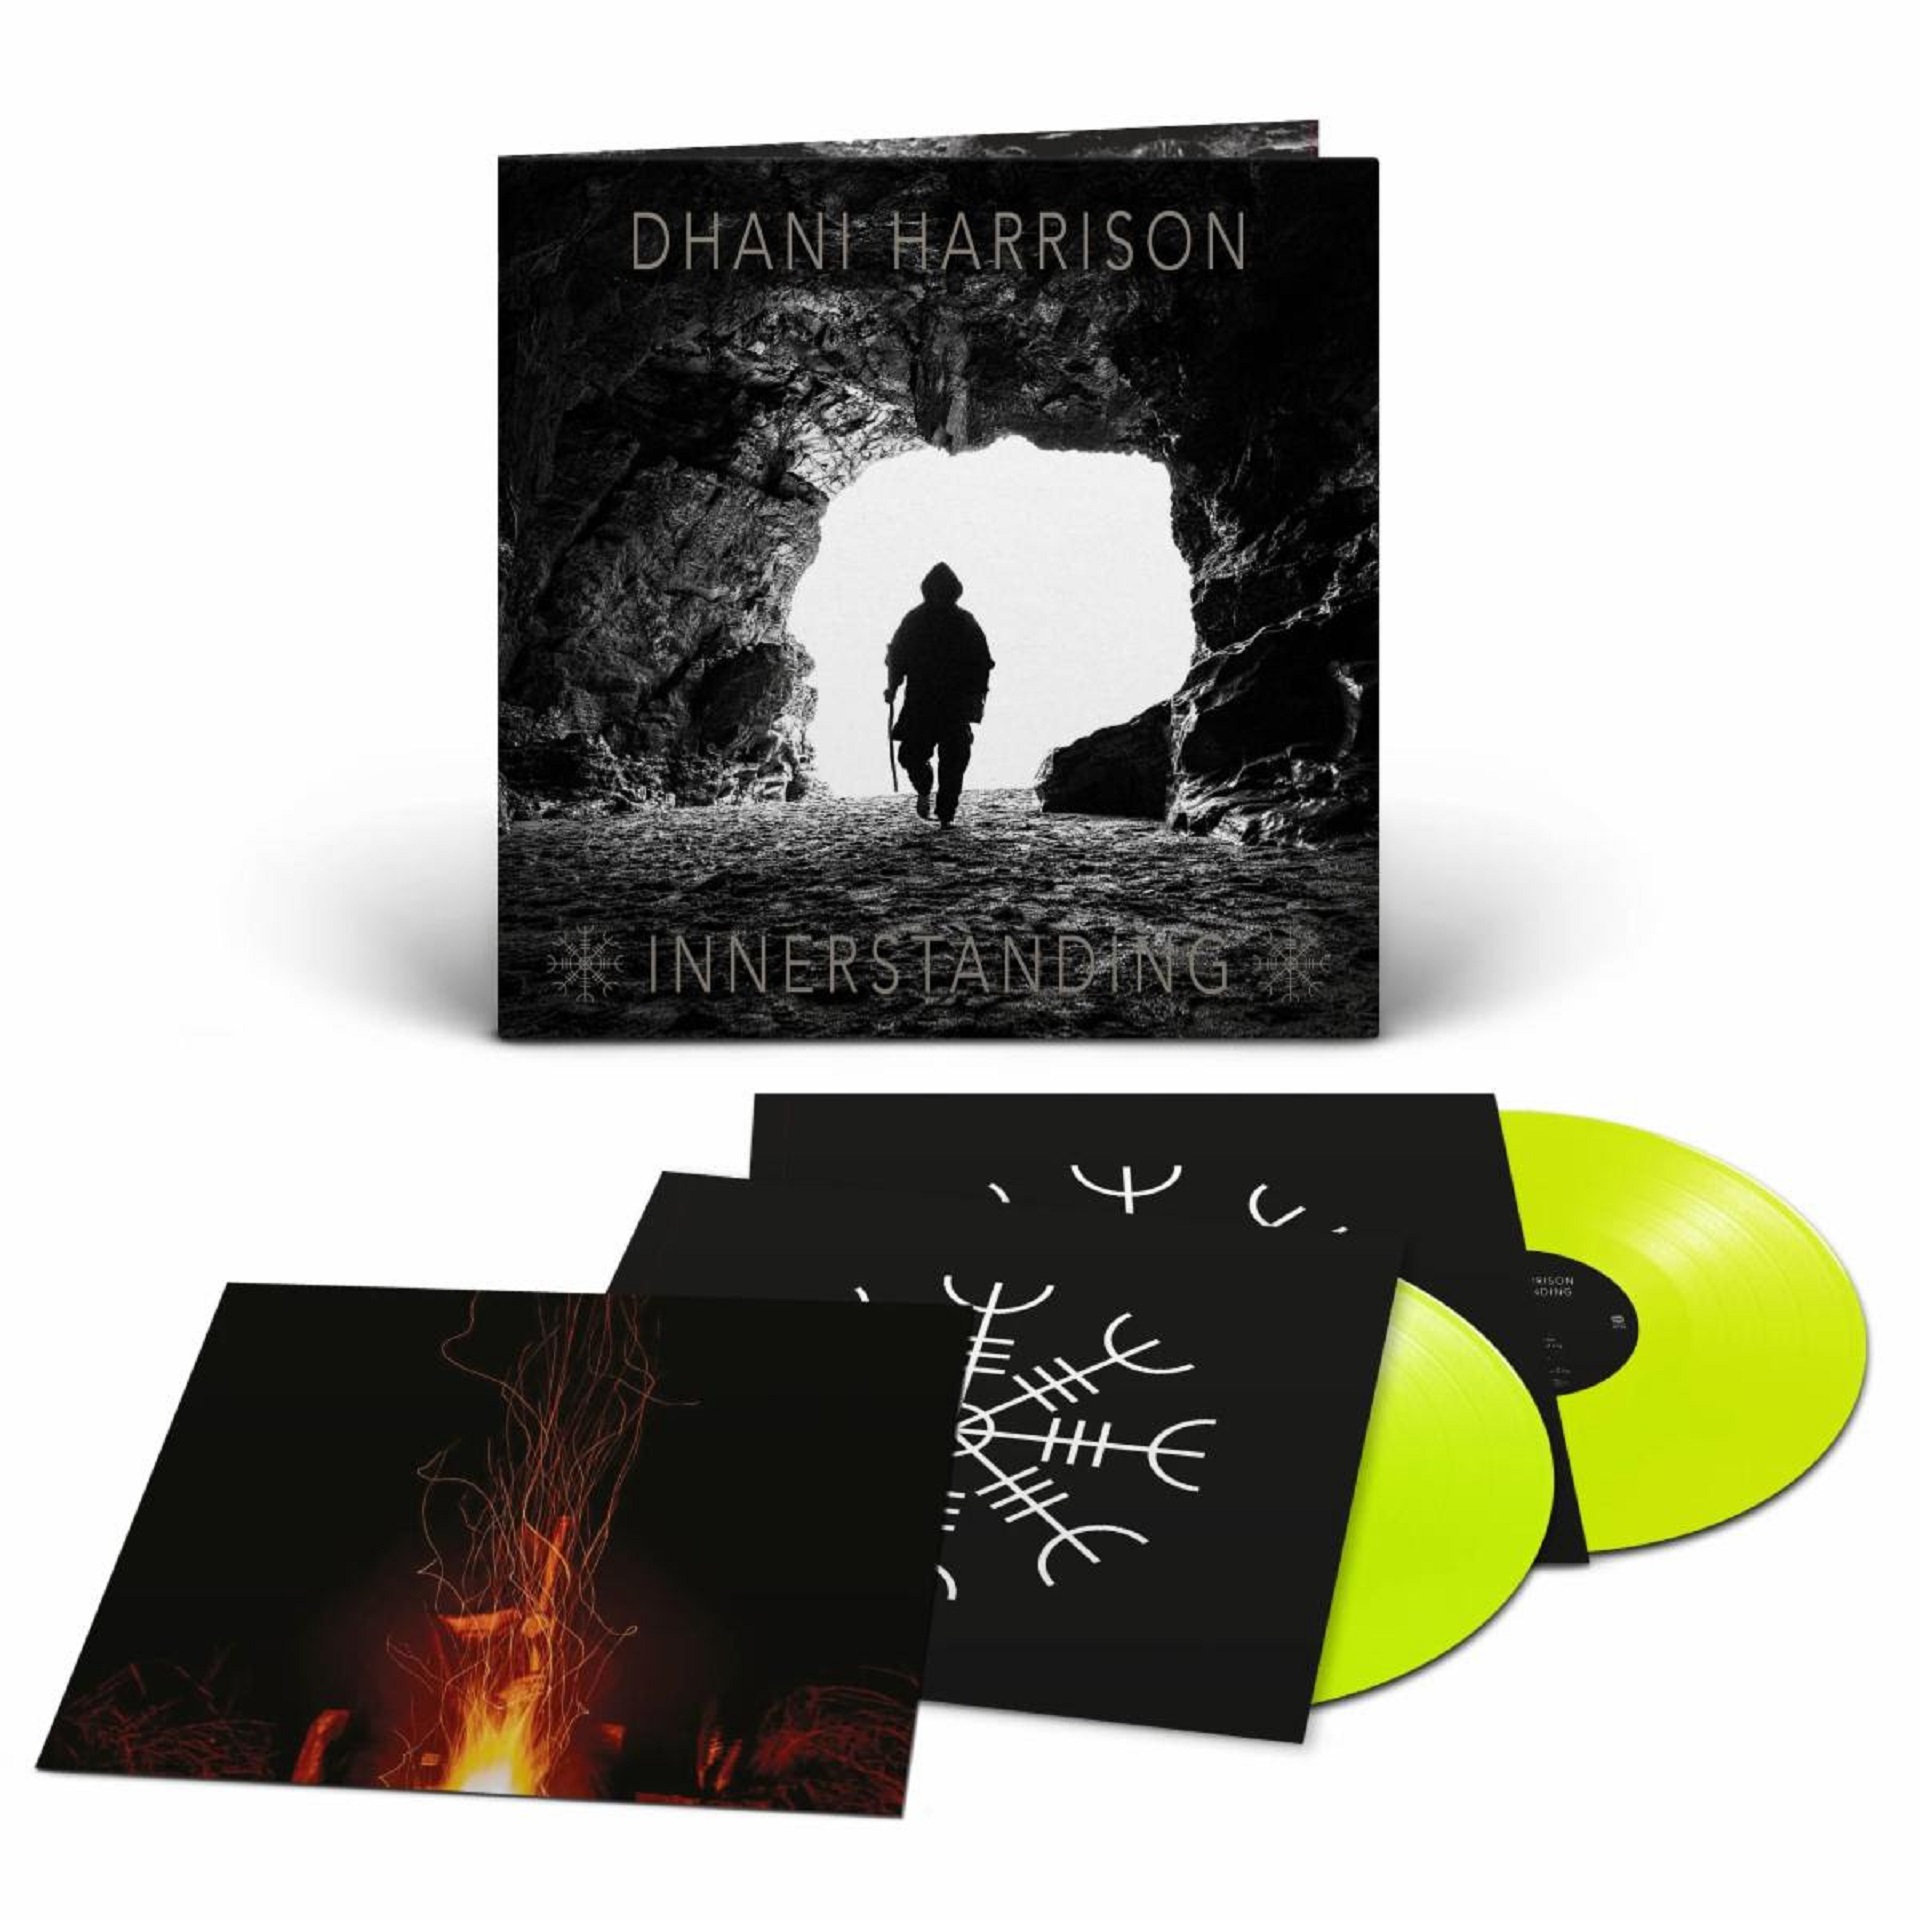 Dhani Harrison Releases 'Innerstanding' On Vinyl And CD